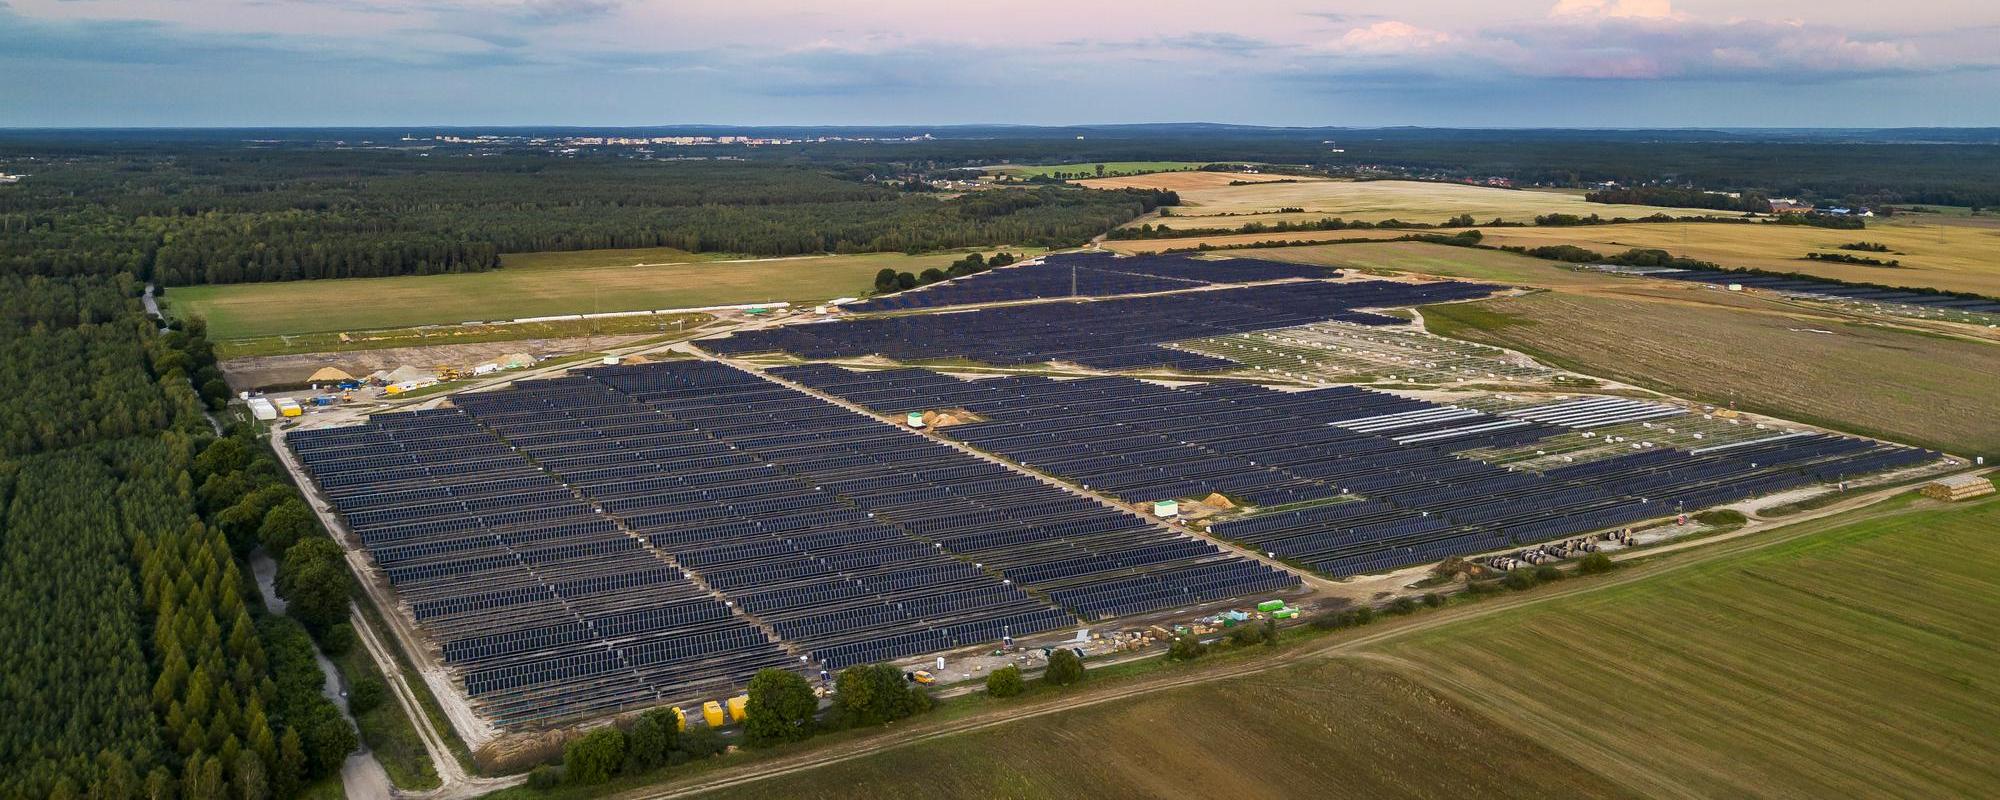 Aerial shot of Kotun solar farm, Poland